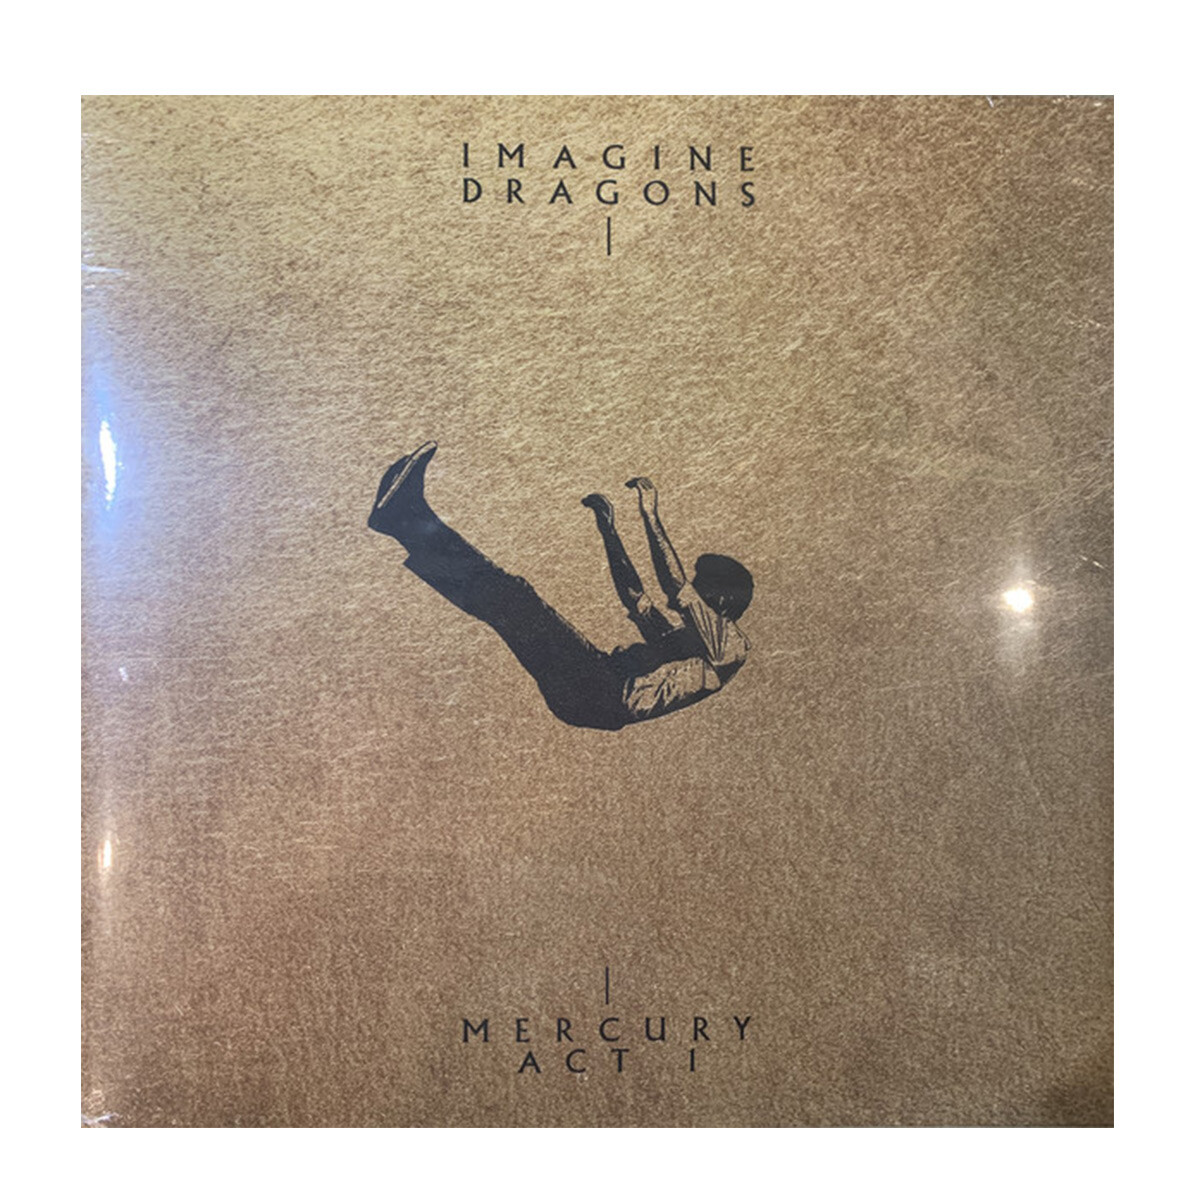 Imagine Dragons - Mercury - Act 1 